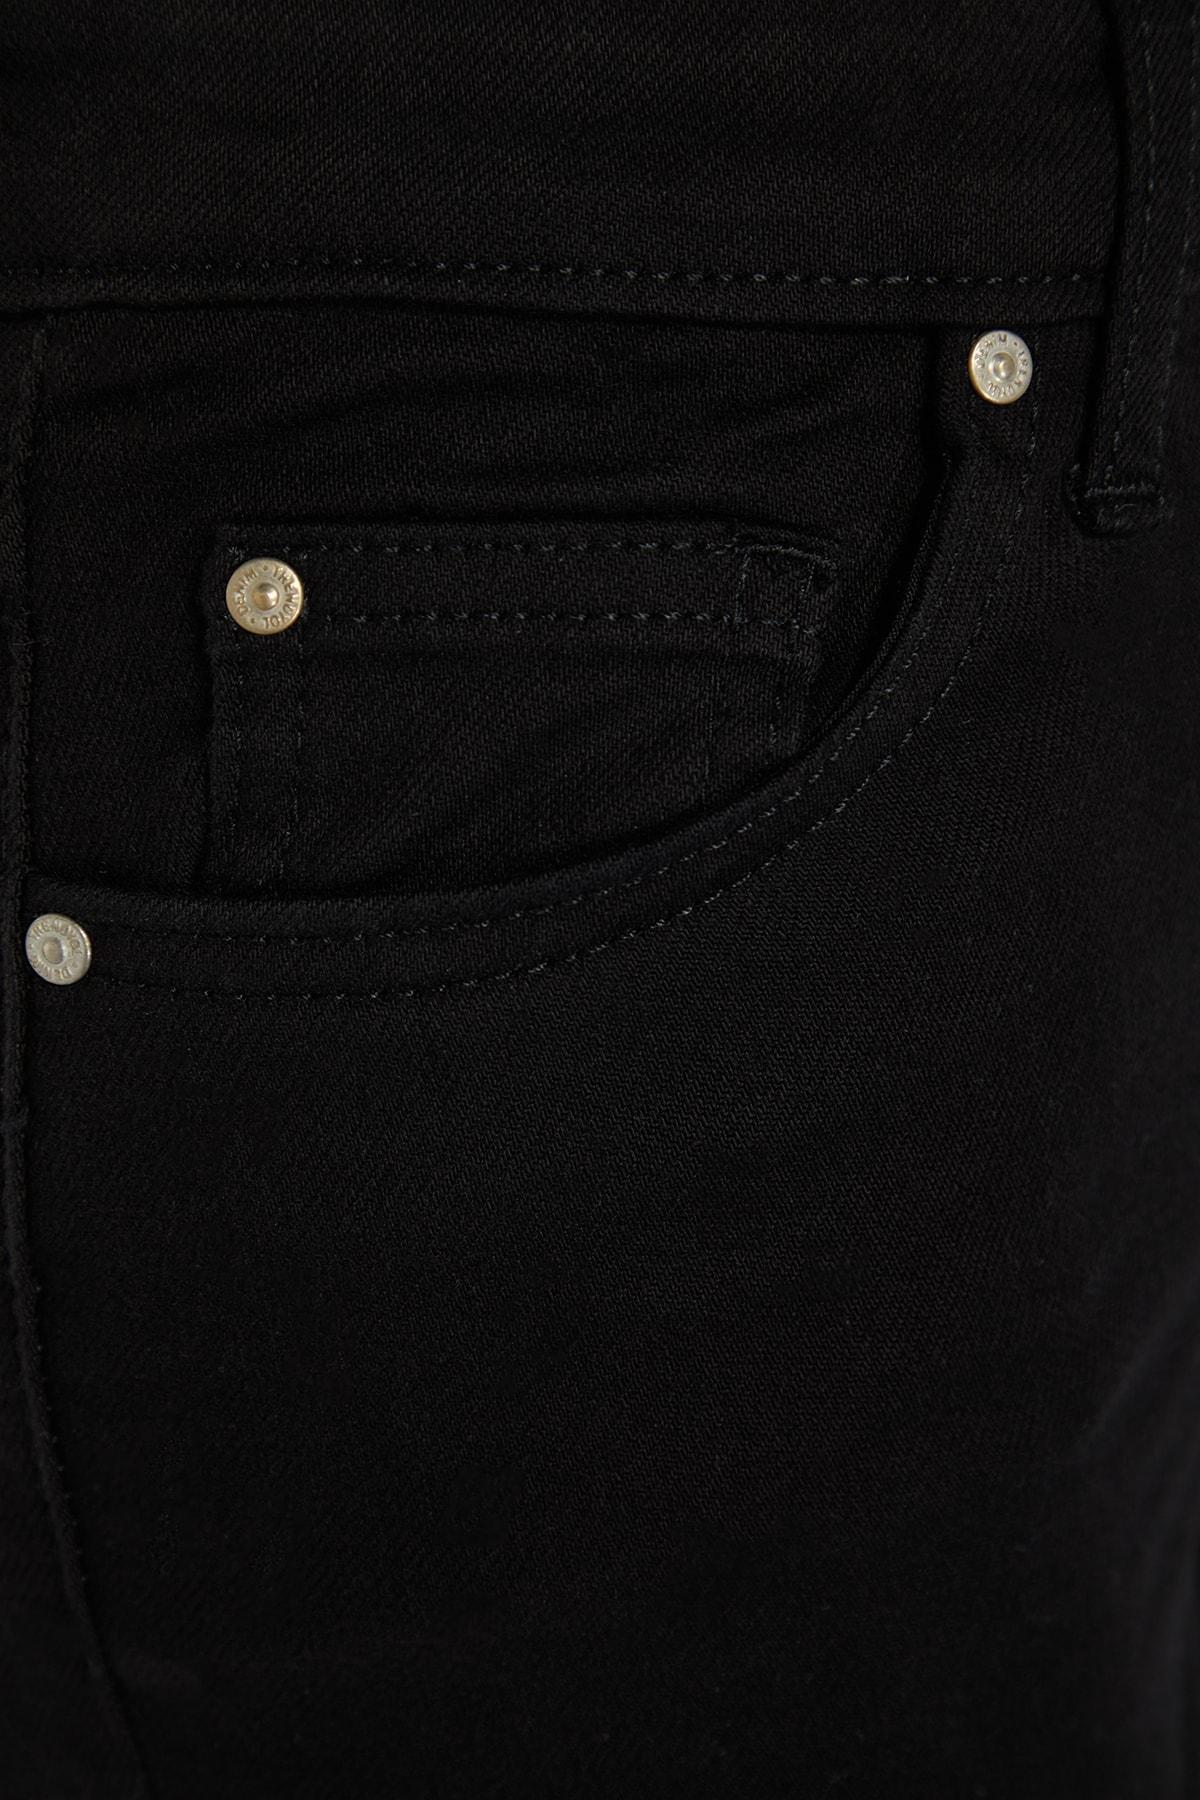 Trendyol - Black Bootcut High Waist Jeans